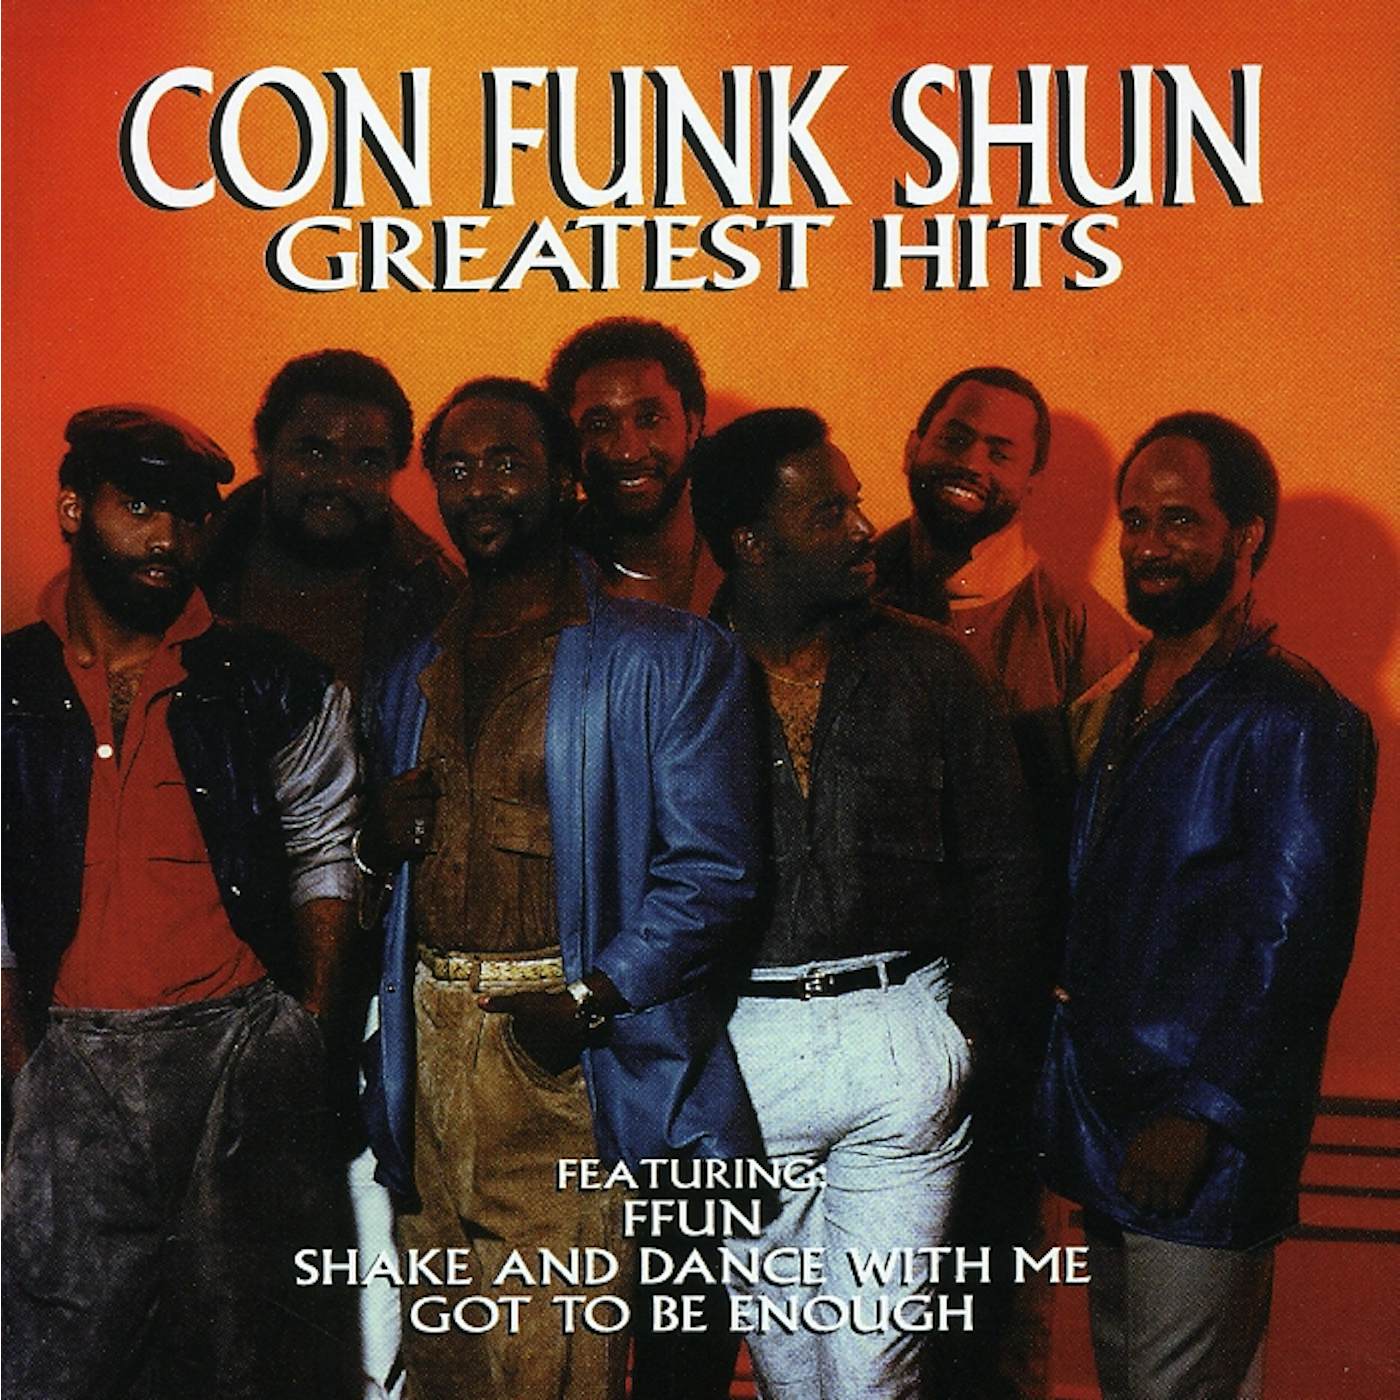 Con Funk Shun GREATEST HITS CD